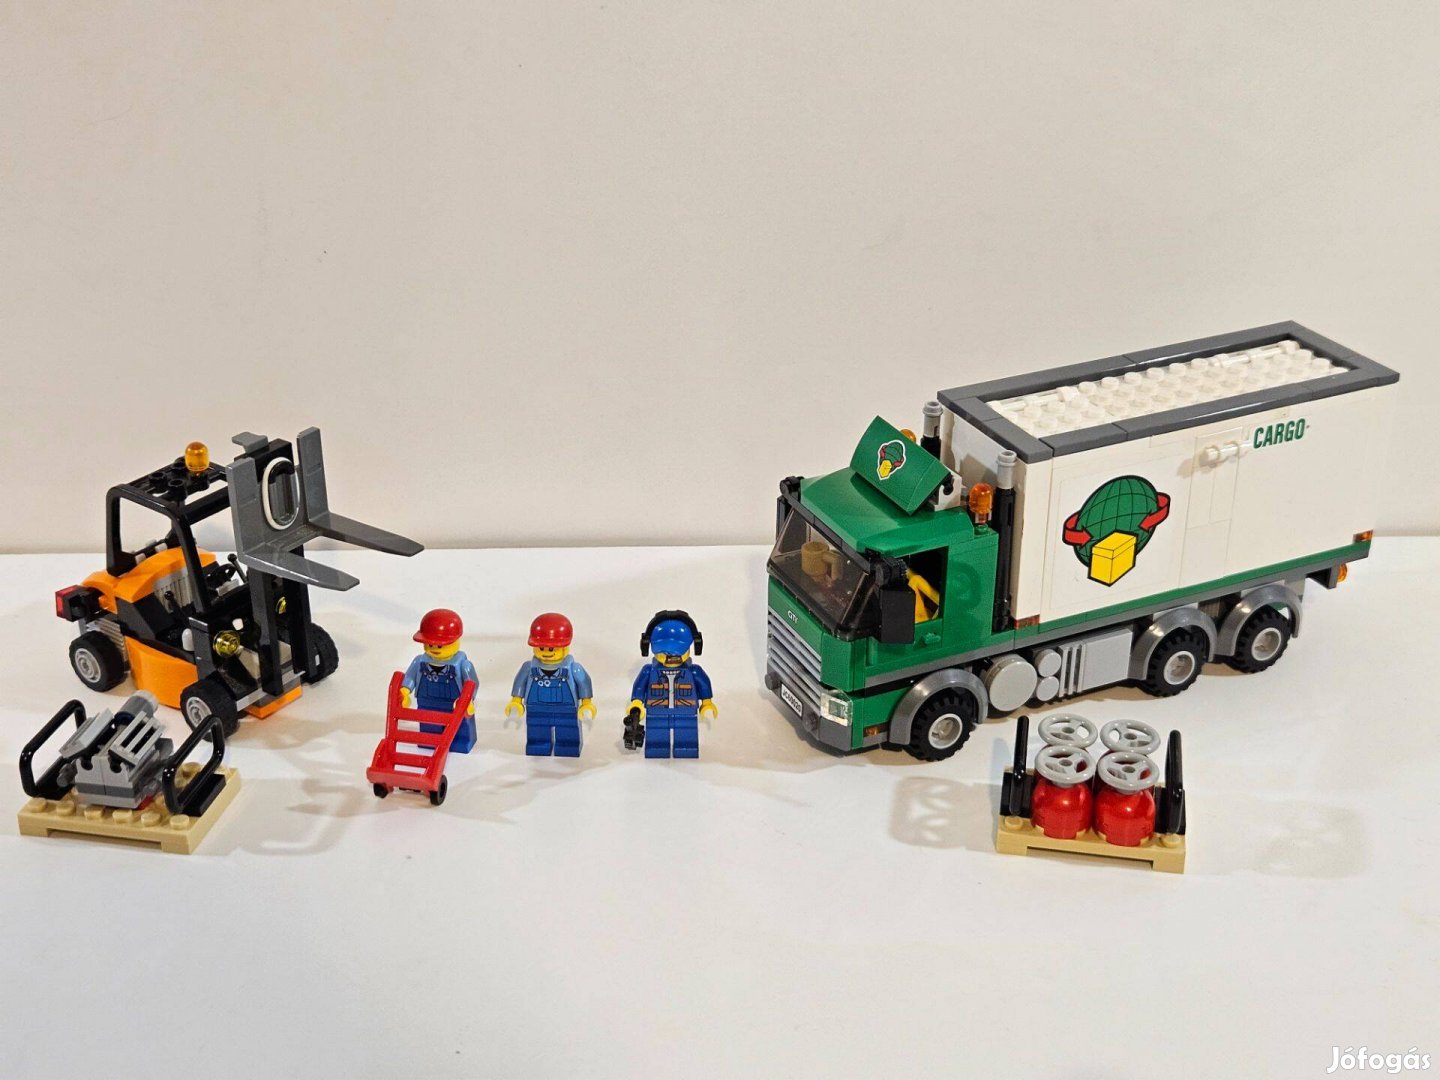 LEGO City - 60020 - Cargo Truck